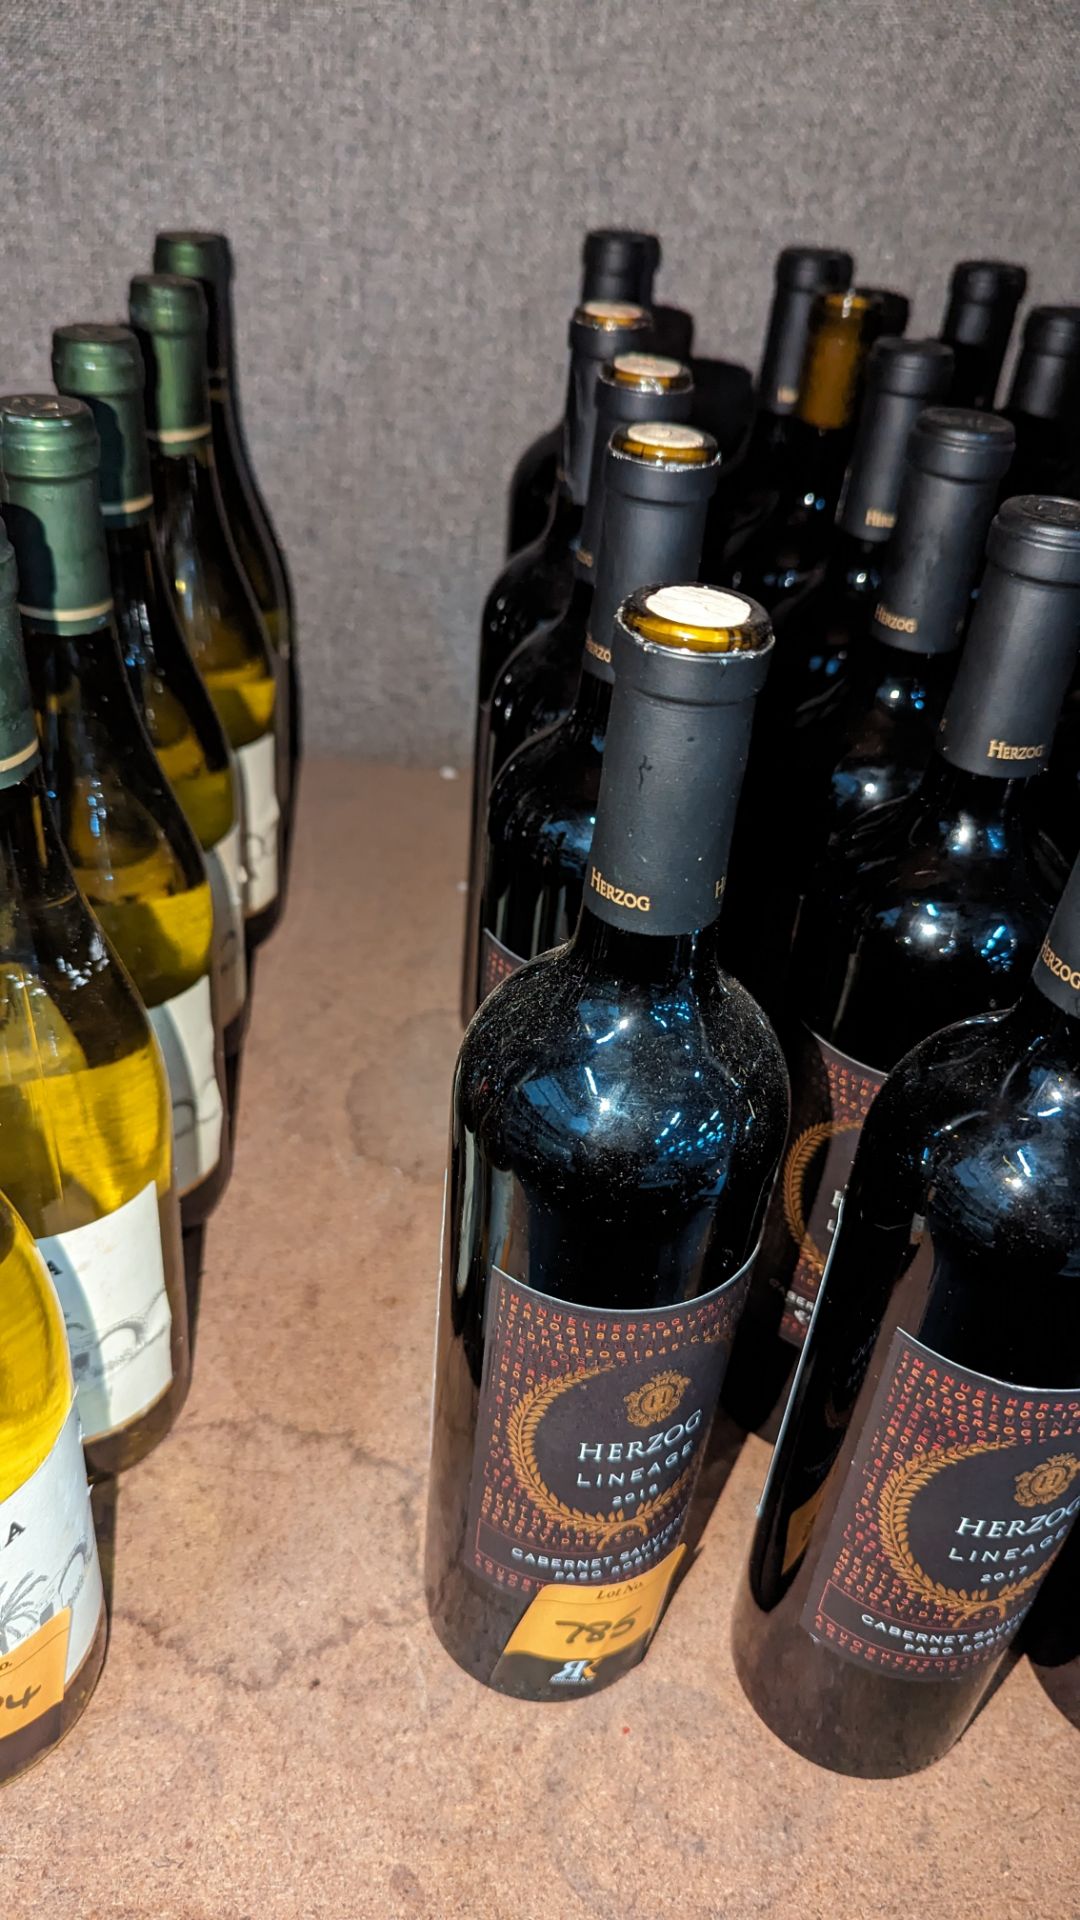 22 bottles of 2018 Herzog Lineage Cabernet Sauvignon Californian red wine & 1 bottle of 2017 Herzog - Image 2 of 6